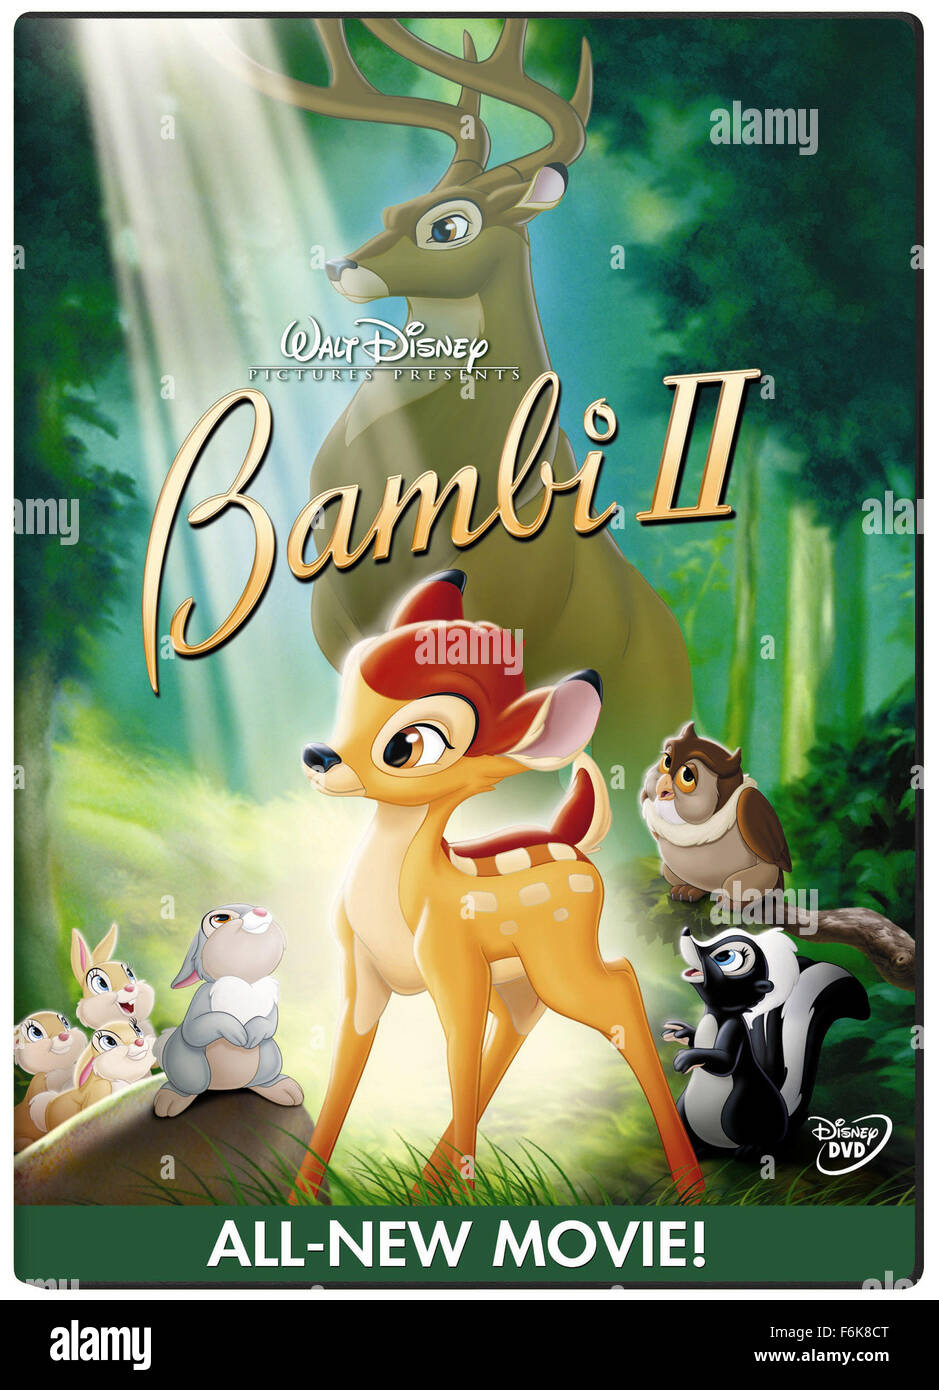 Bambi full movie free online